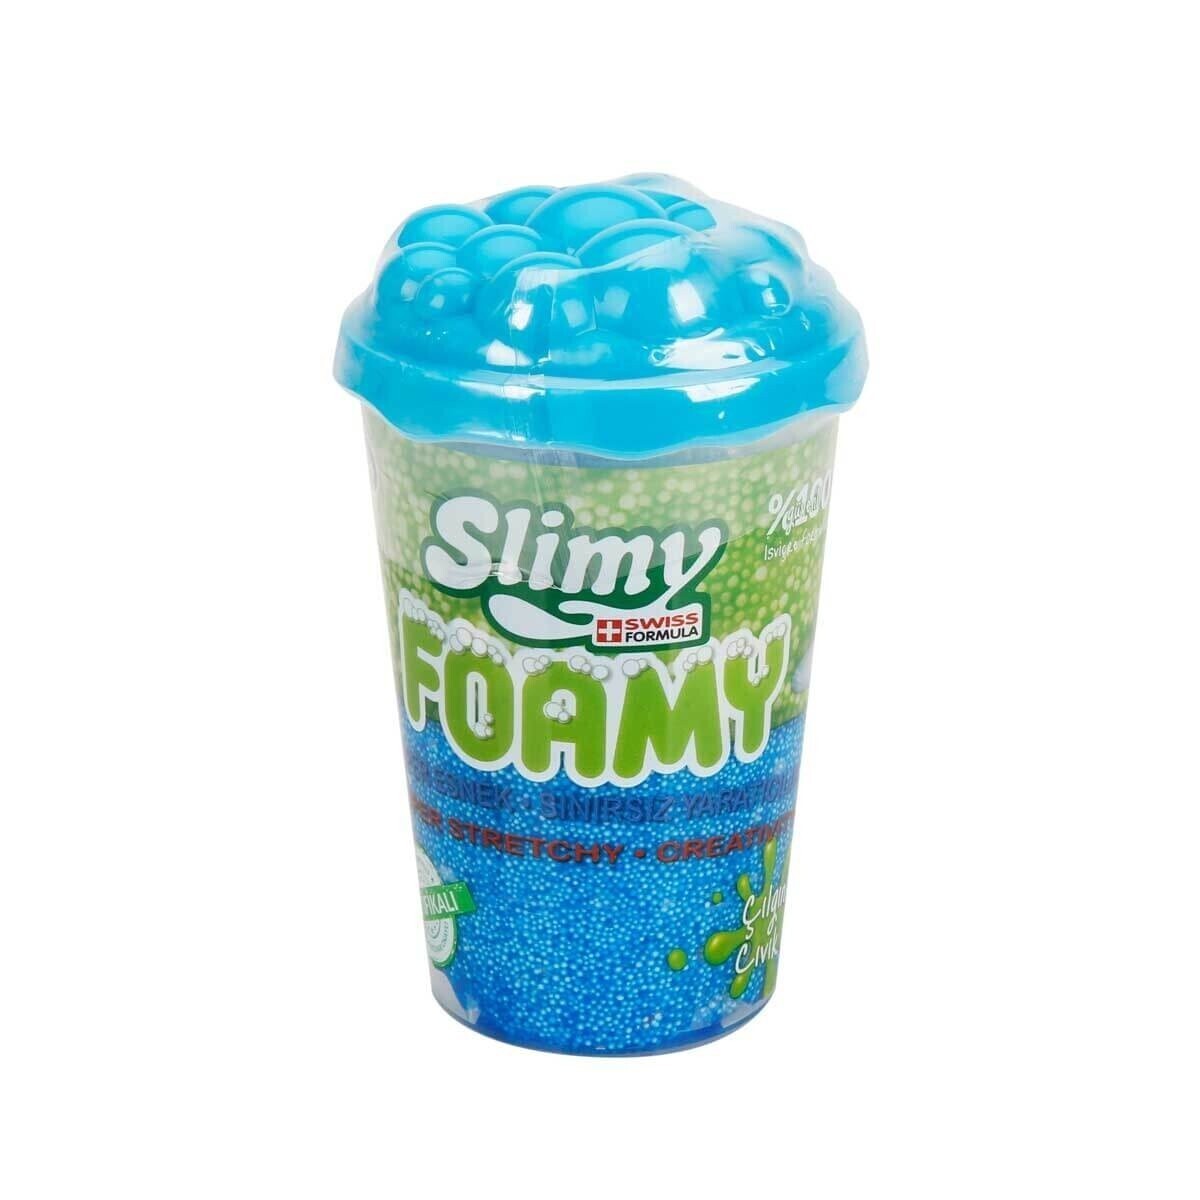 Slimy - Foamy